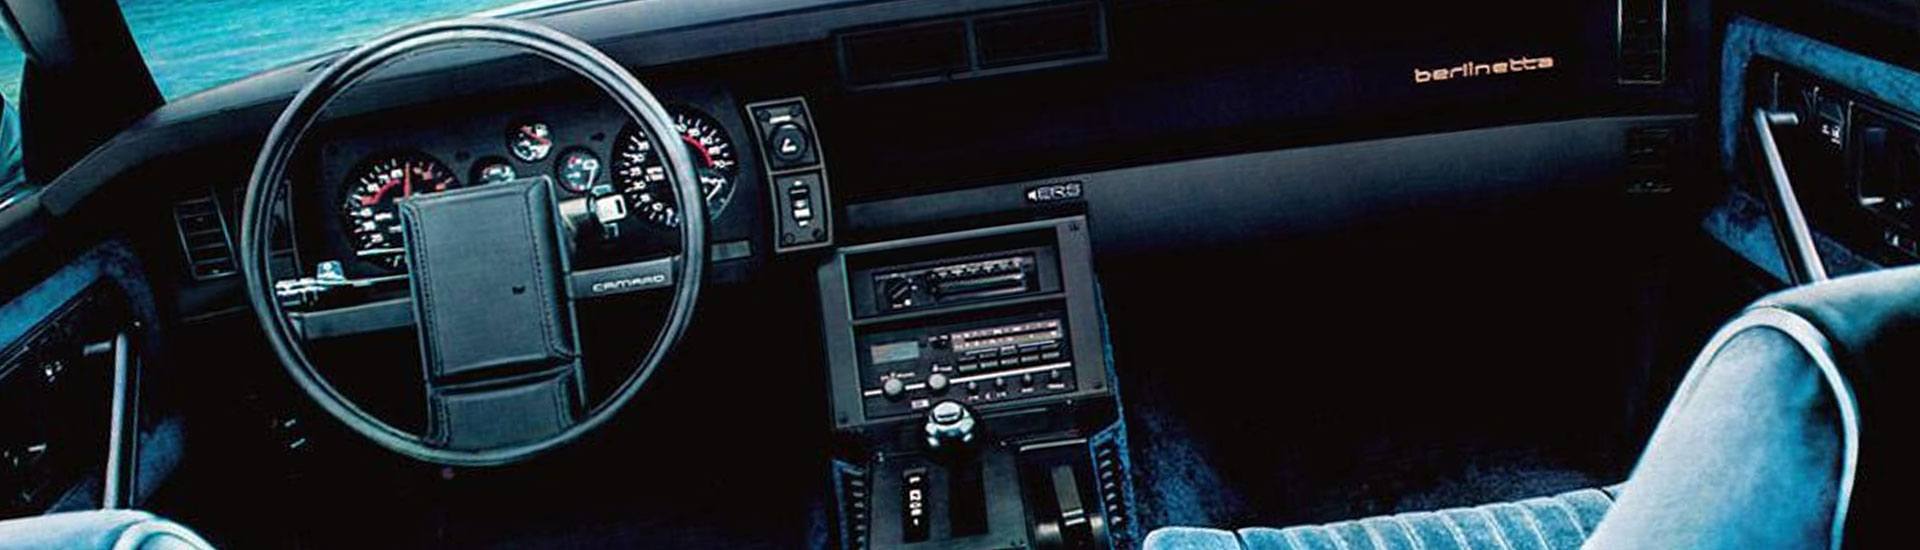 1982 Chevrolet Camaro Dash Kits